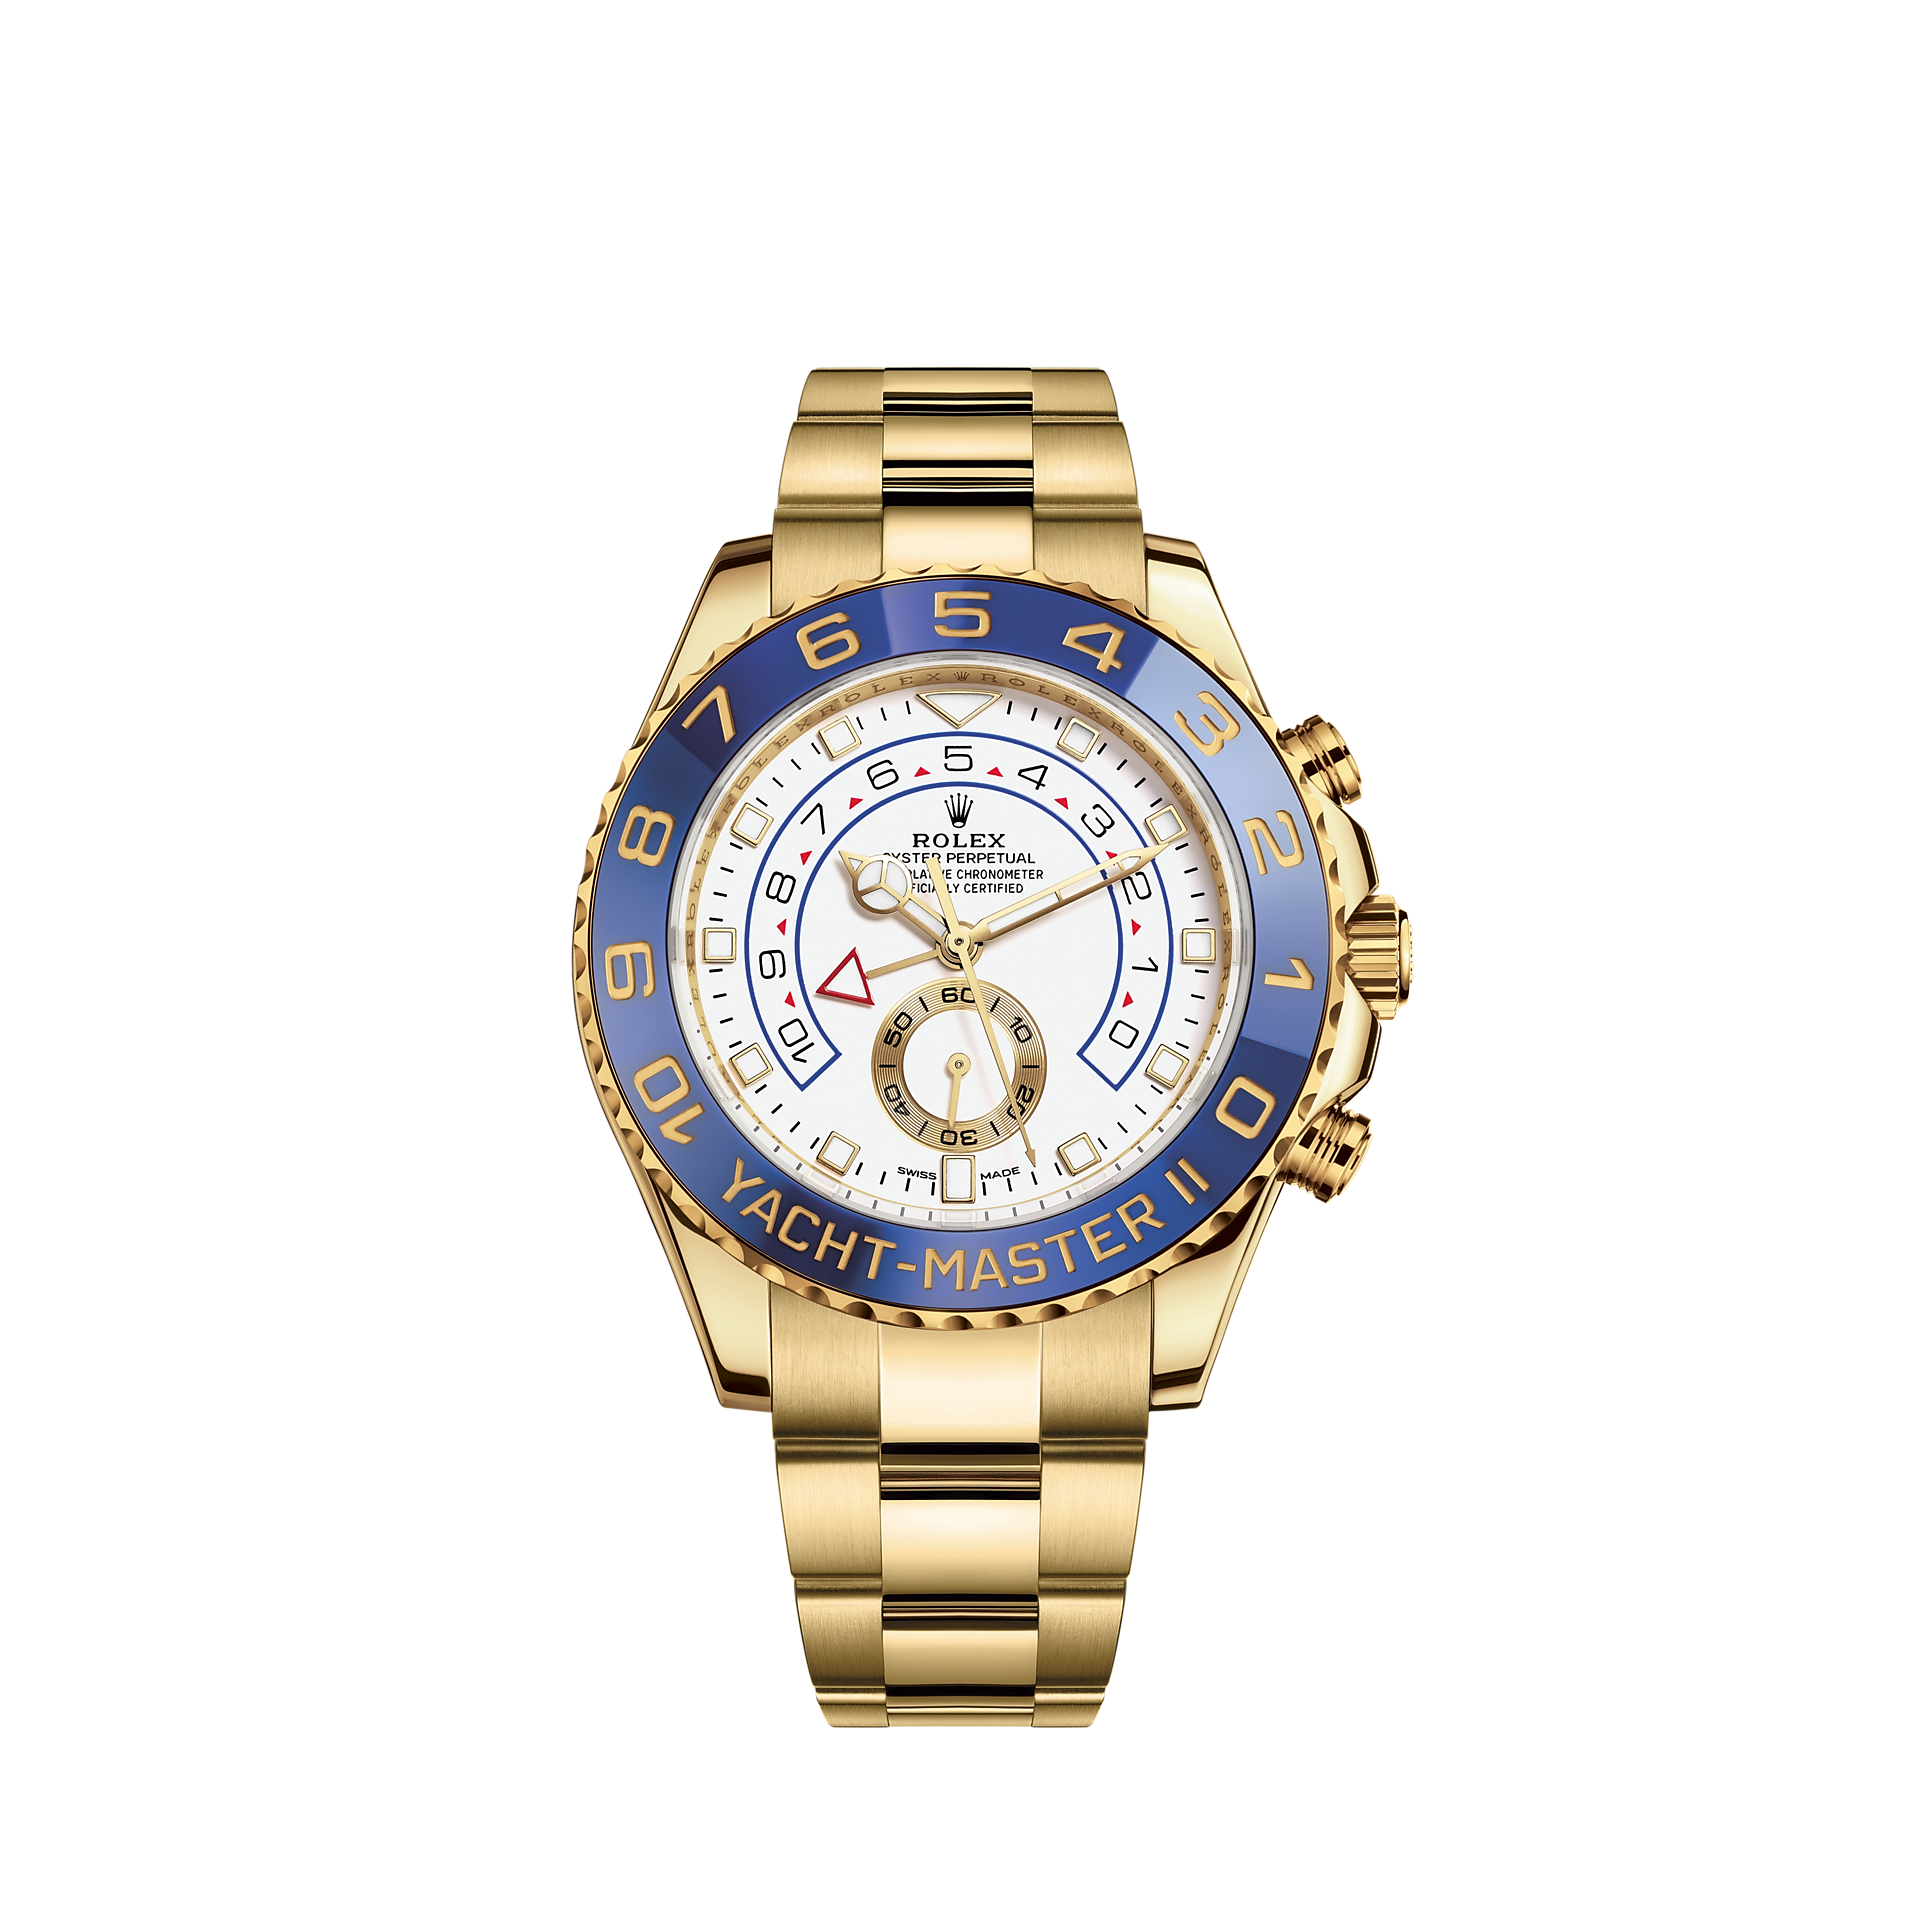 Rolex Yacht-Master II watch: 18 ct yellow gold - M116688-0002